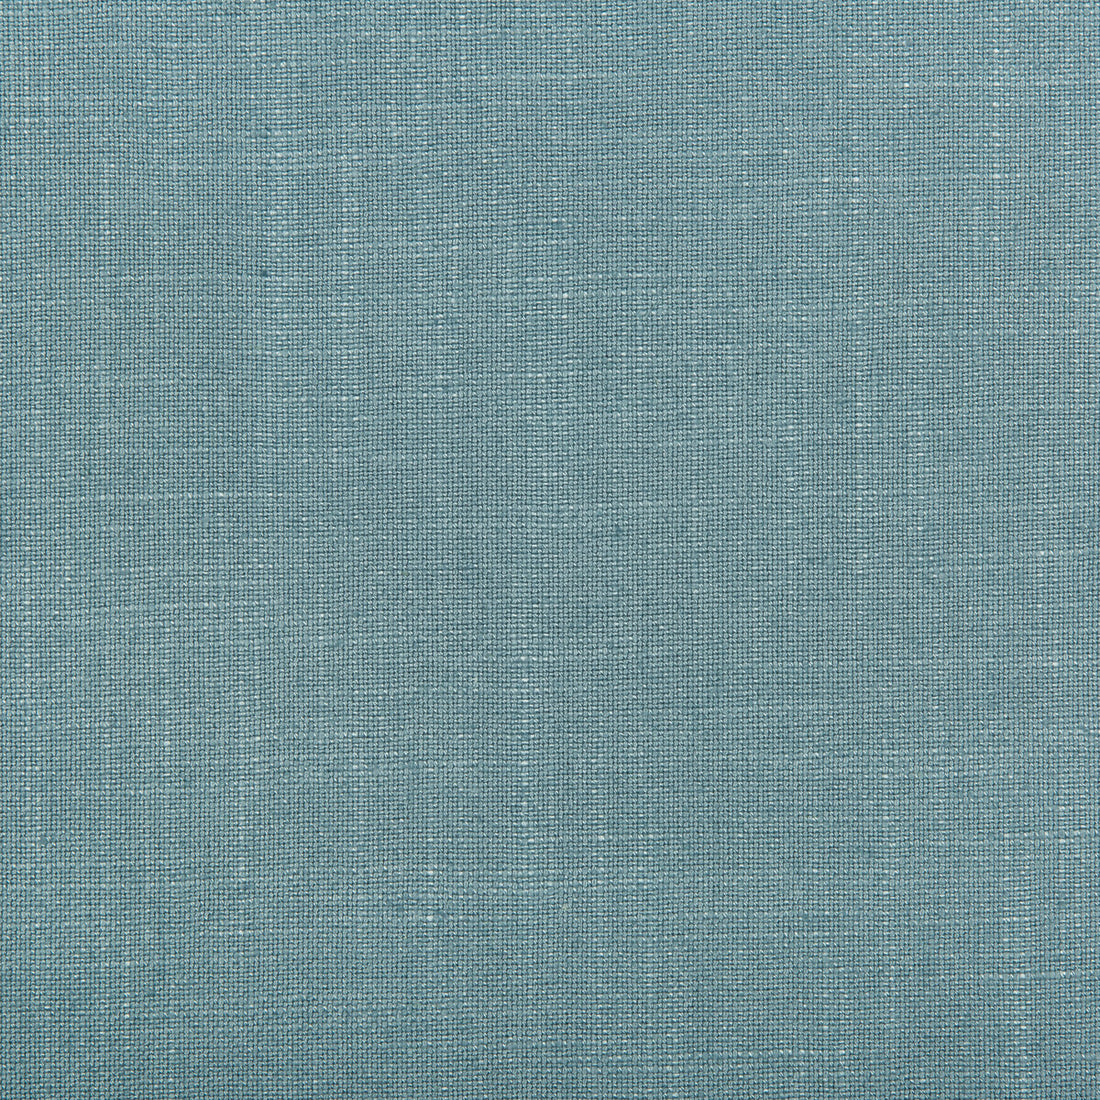 Aura fabric in sky color - pattern 35520.5115.0 - by Kravet Design